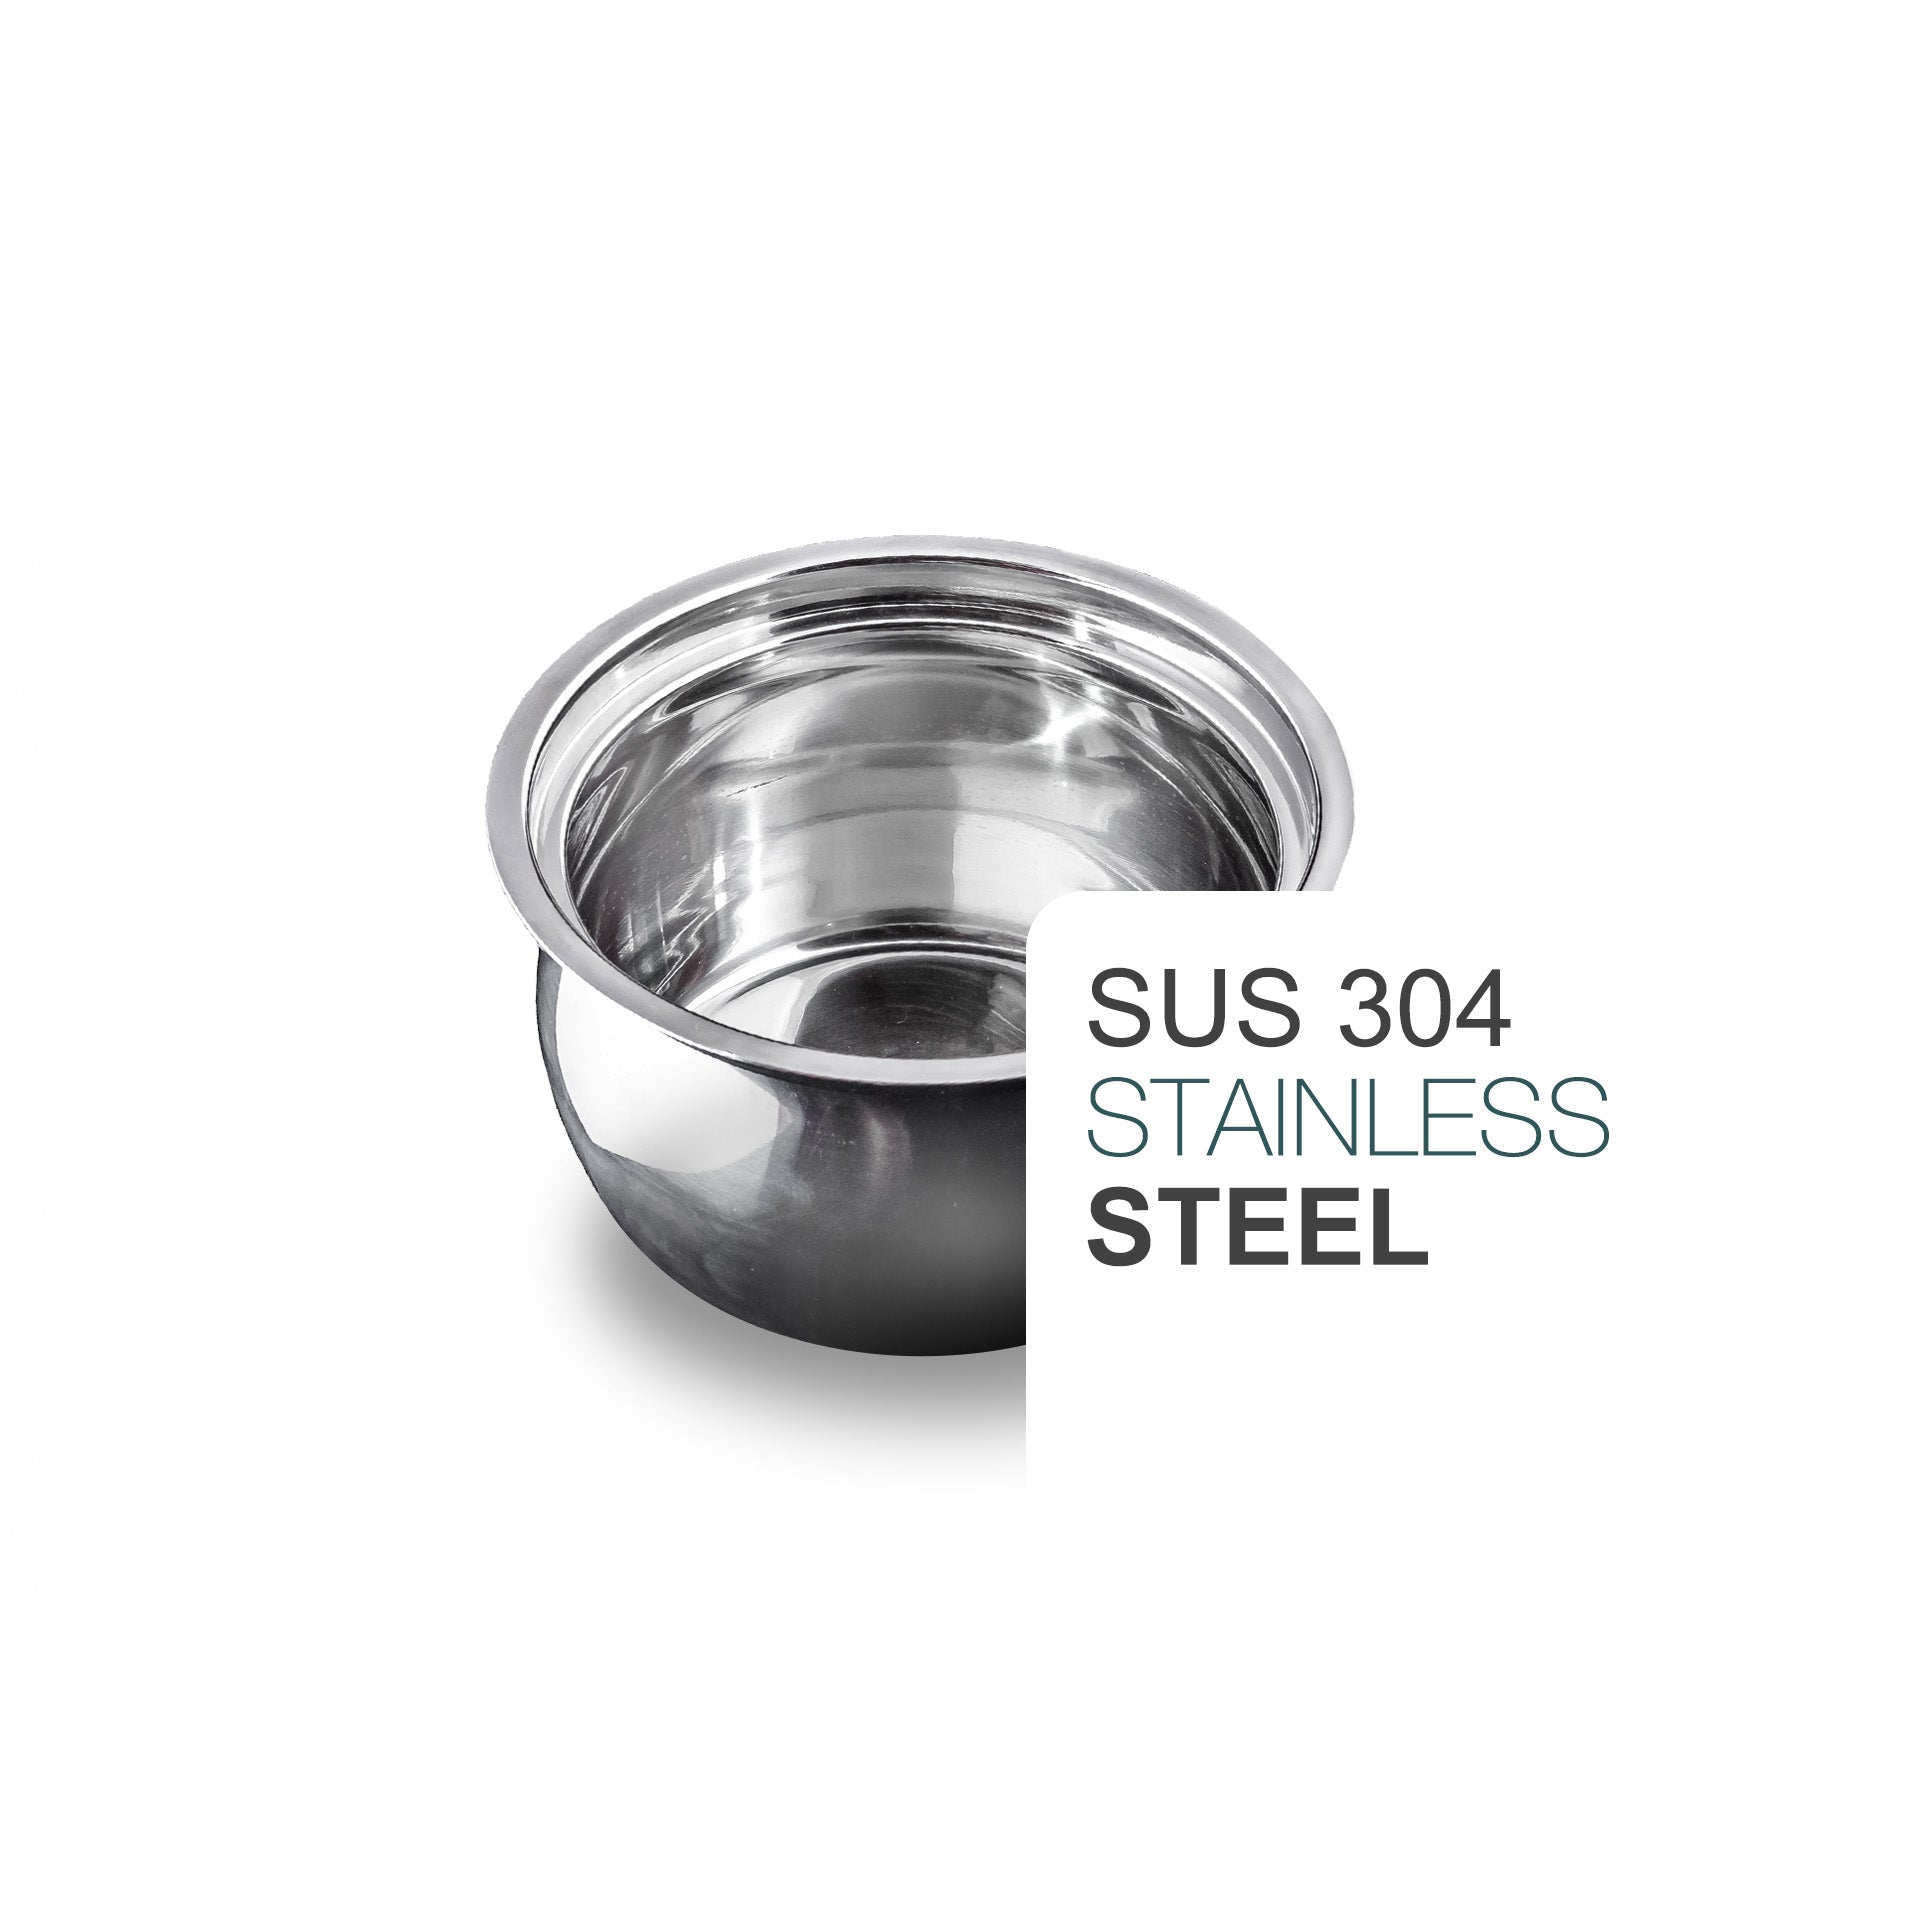 Buffalo Stainless Steel Inner Pot Mini Smart Cooker (3 cups) Pre-order